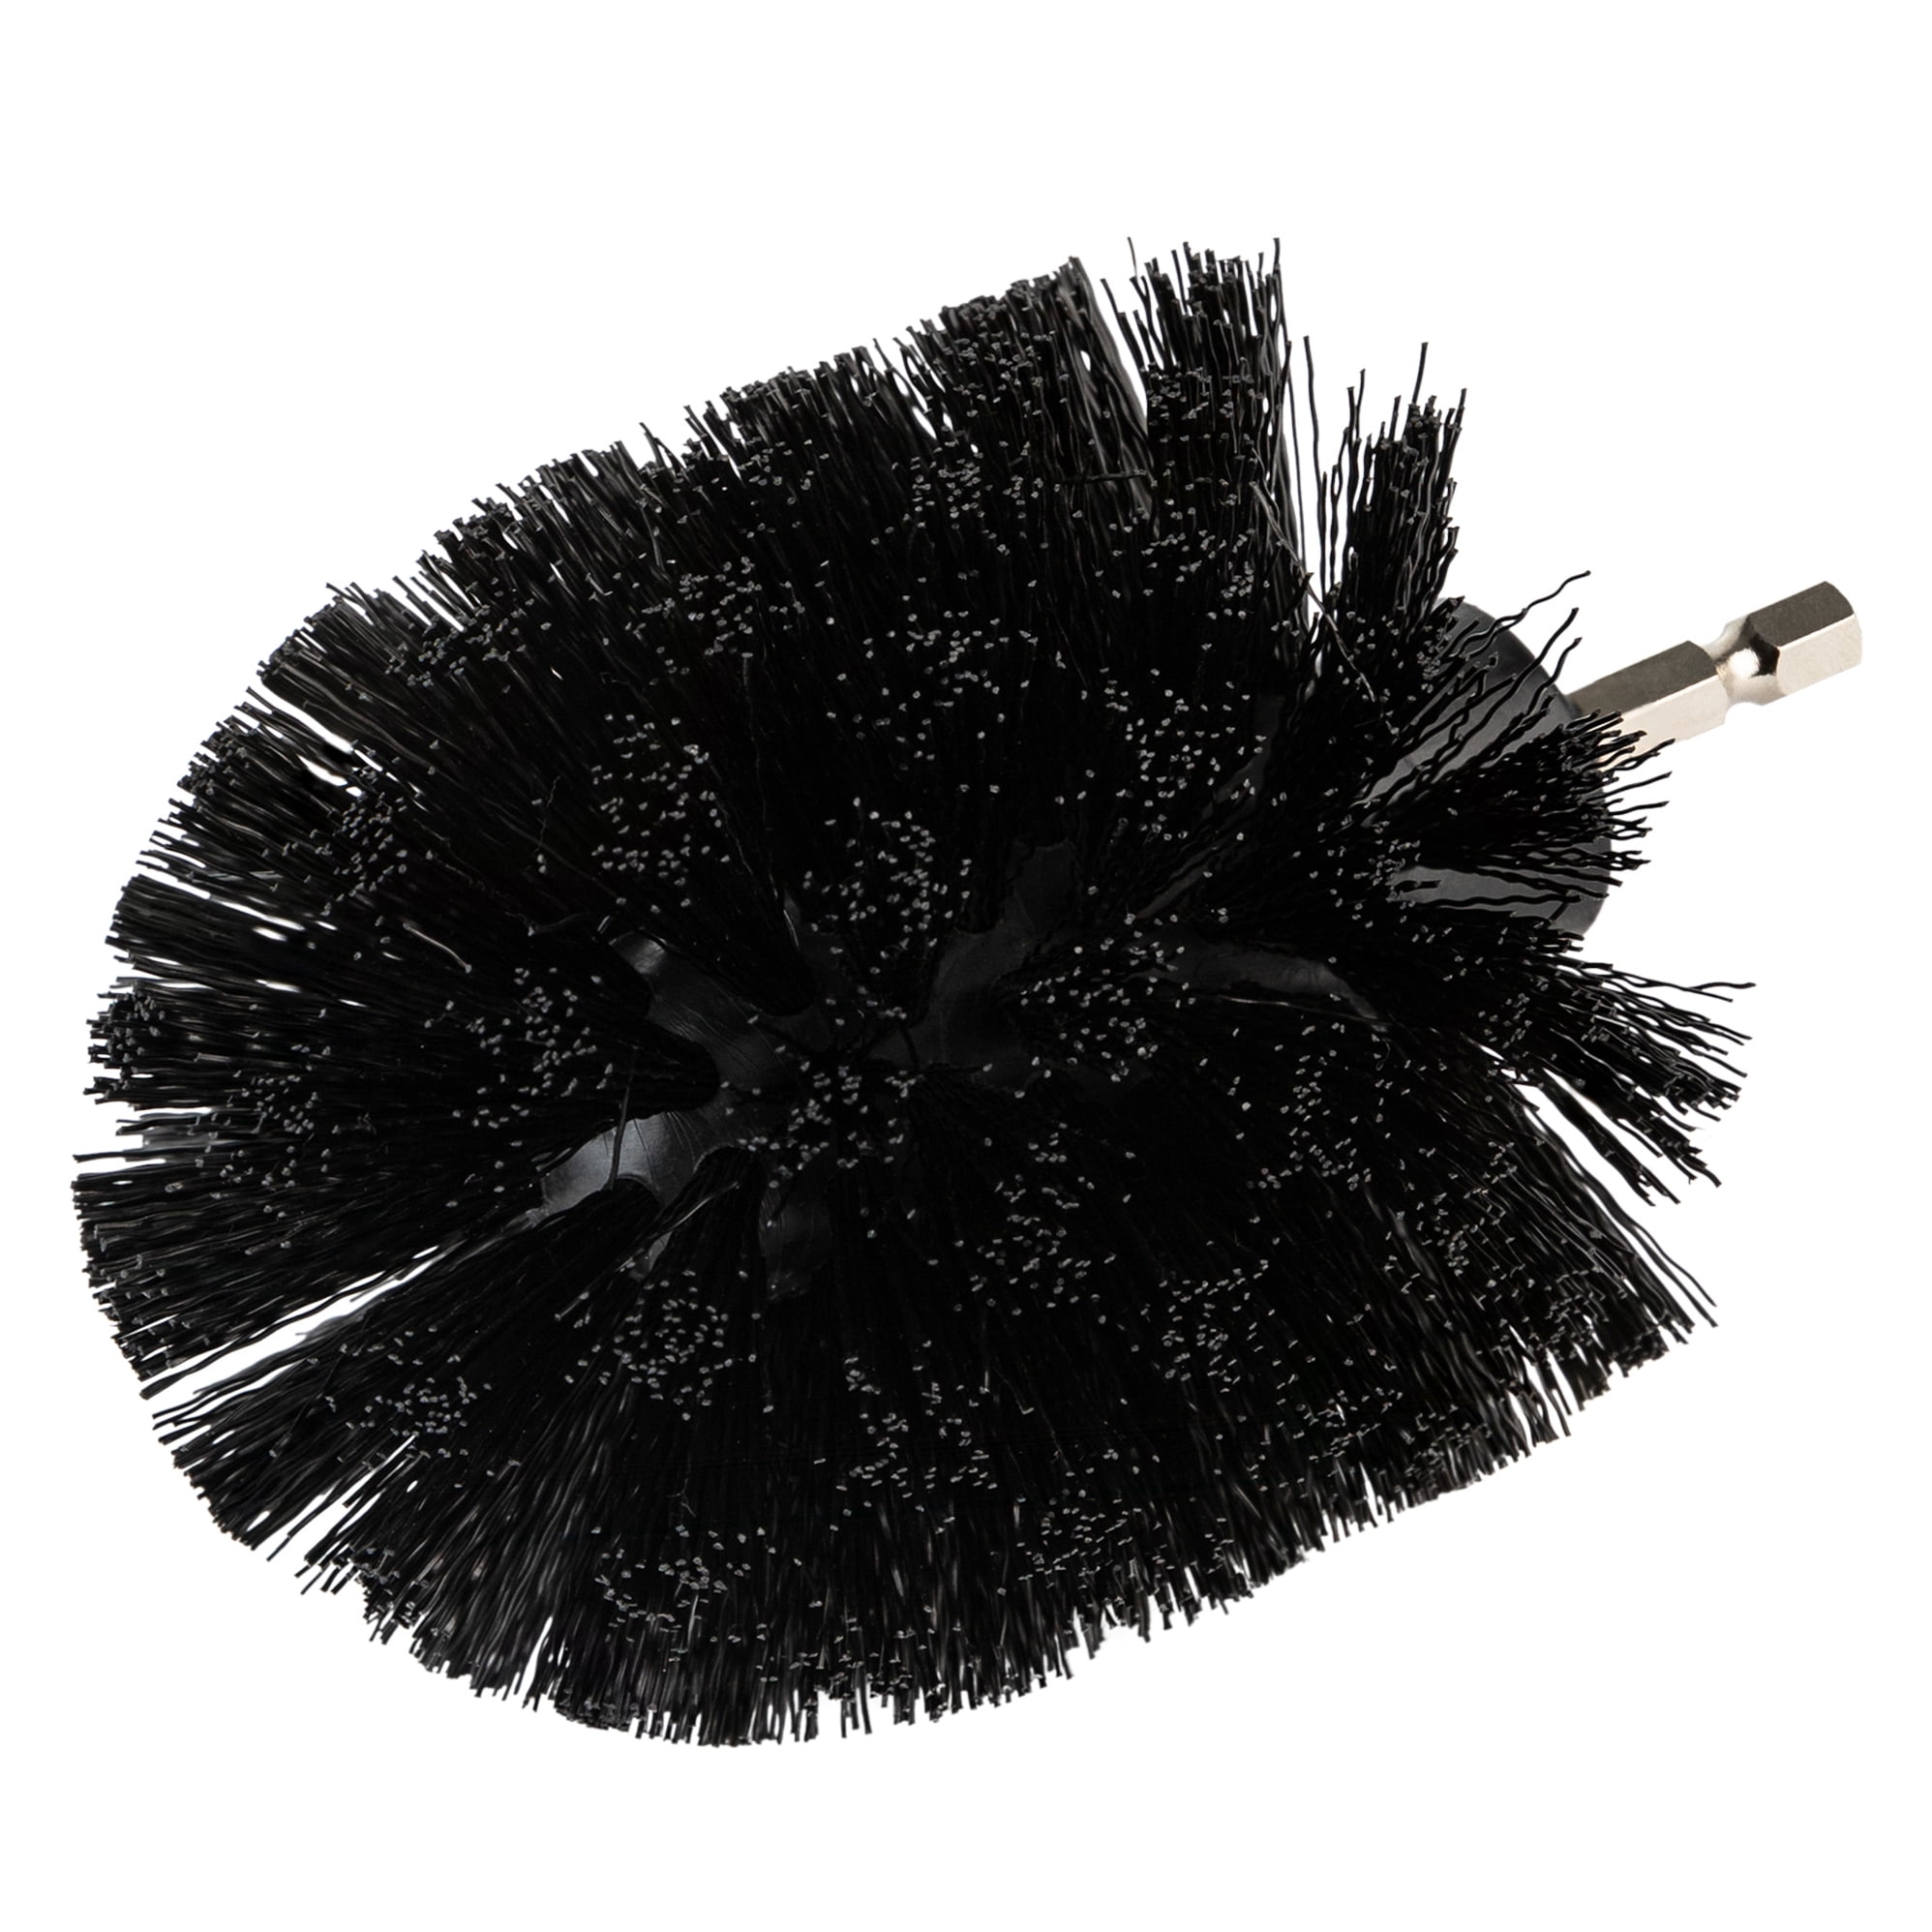 Hyper Tough Nylon Scrub Brush Cleaning Attachments for Power Drills, 3-Piece, Black 41026